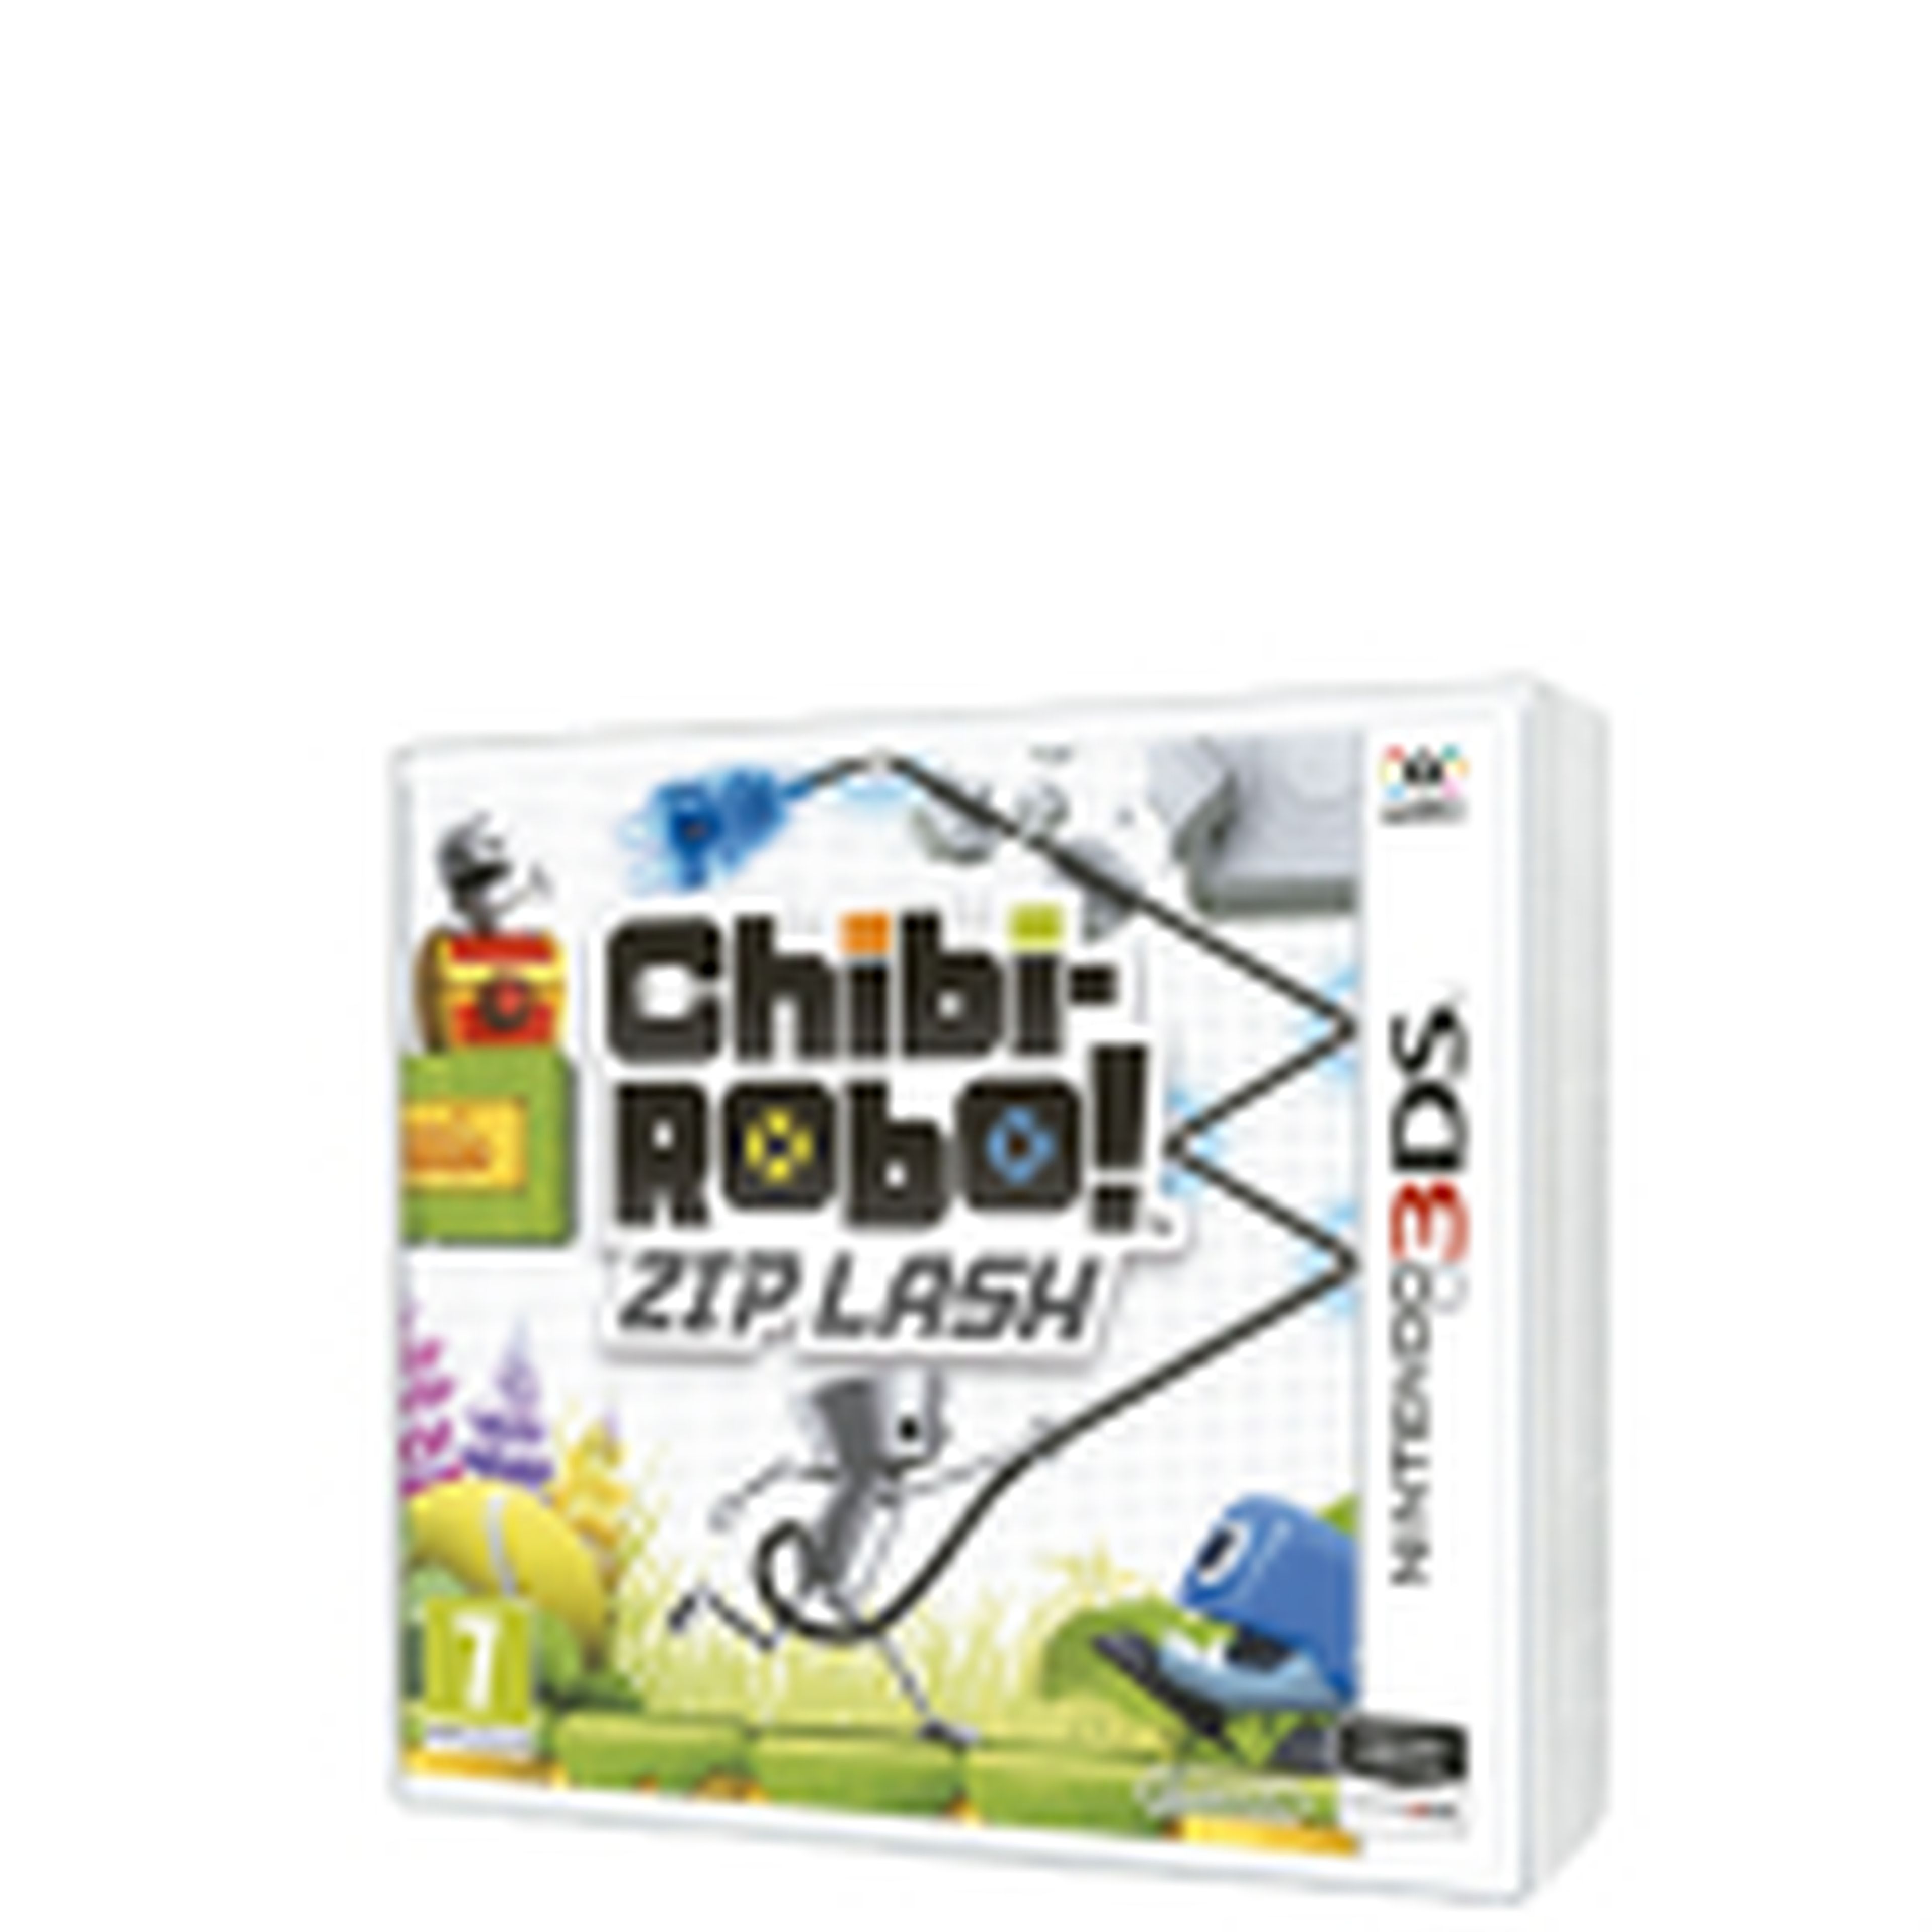 Chibi-Robo! Zip Lash para 3DS